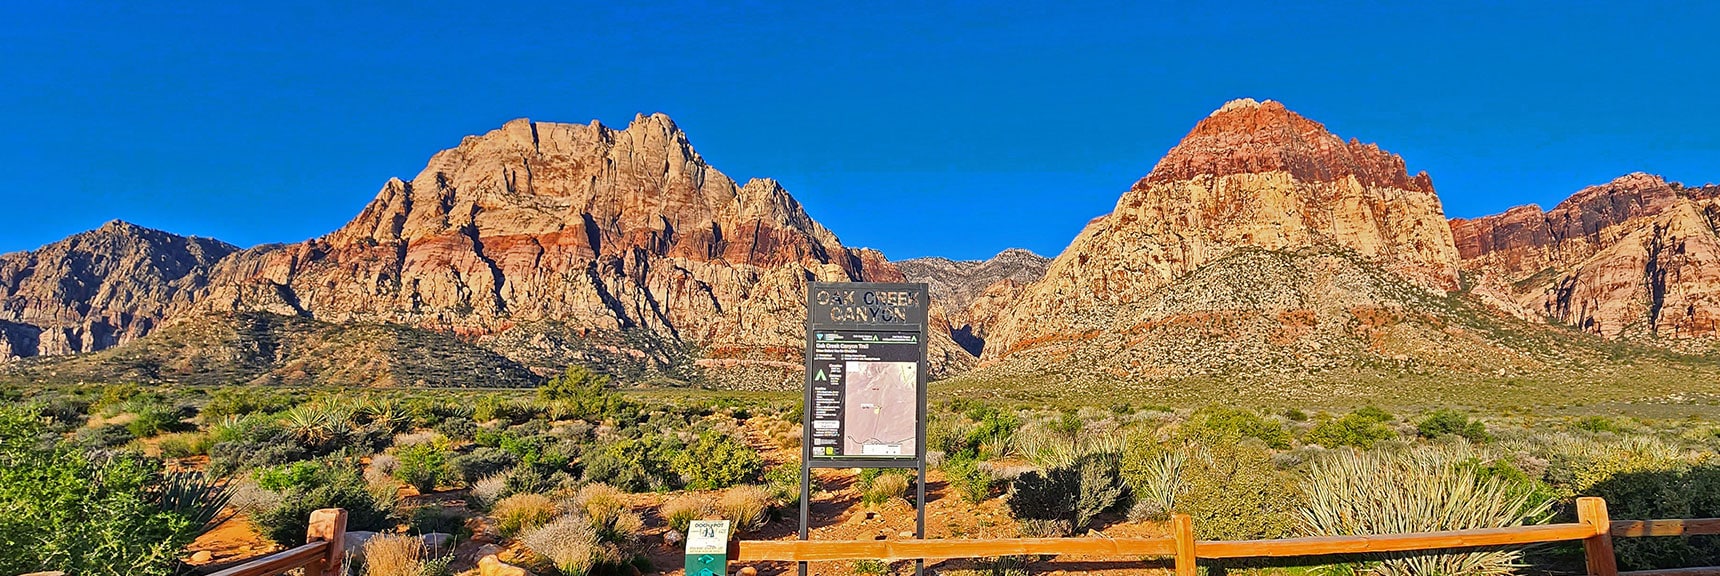 Oak Creek Canyon Trailhead. Mt. Wilson (left); Rainbow Mt. (right) | Knoll Trail | Red Rock Canyon National Conservation Area, Nevada | David Smith | LasVegasAreaTrails.com